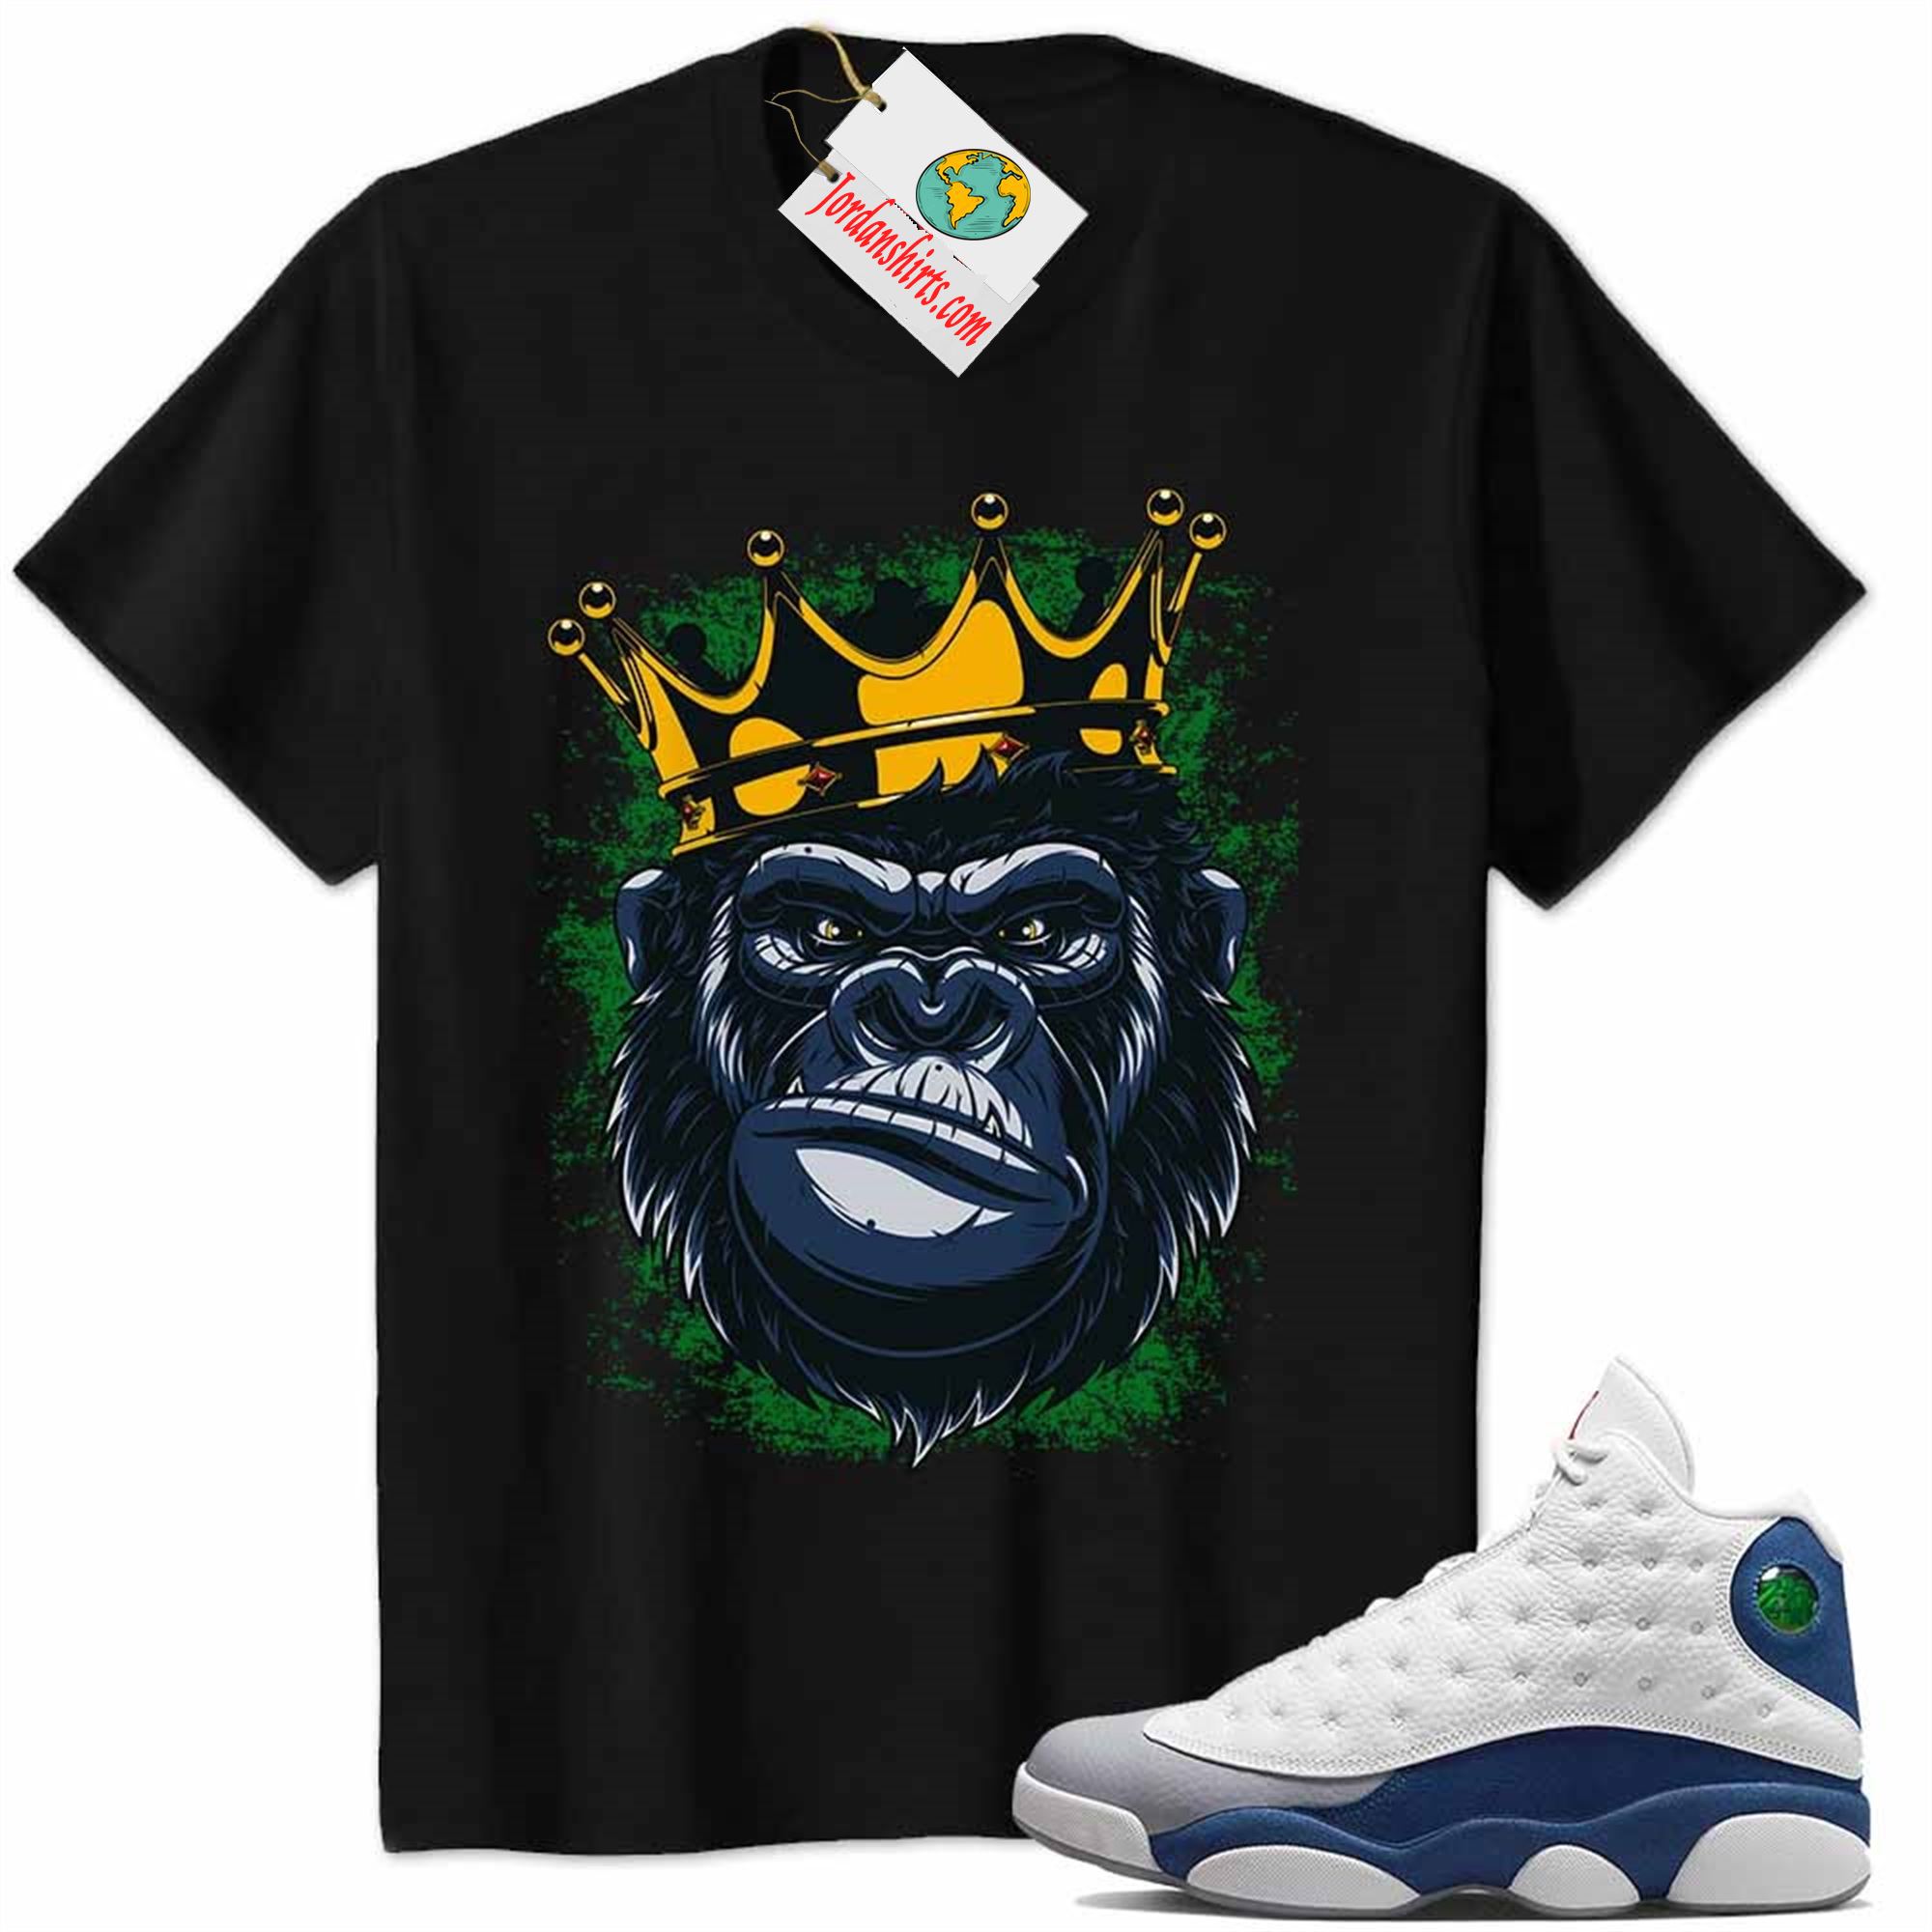 Jordan 13 Shirt, Jordan 13 French Blue Shirt Shirt The Gorilla King With Crown Black Plus Size Up To 5xl